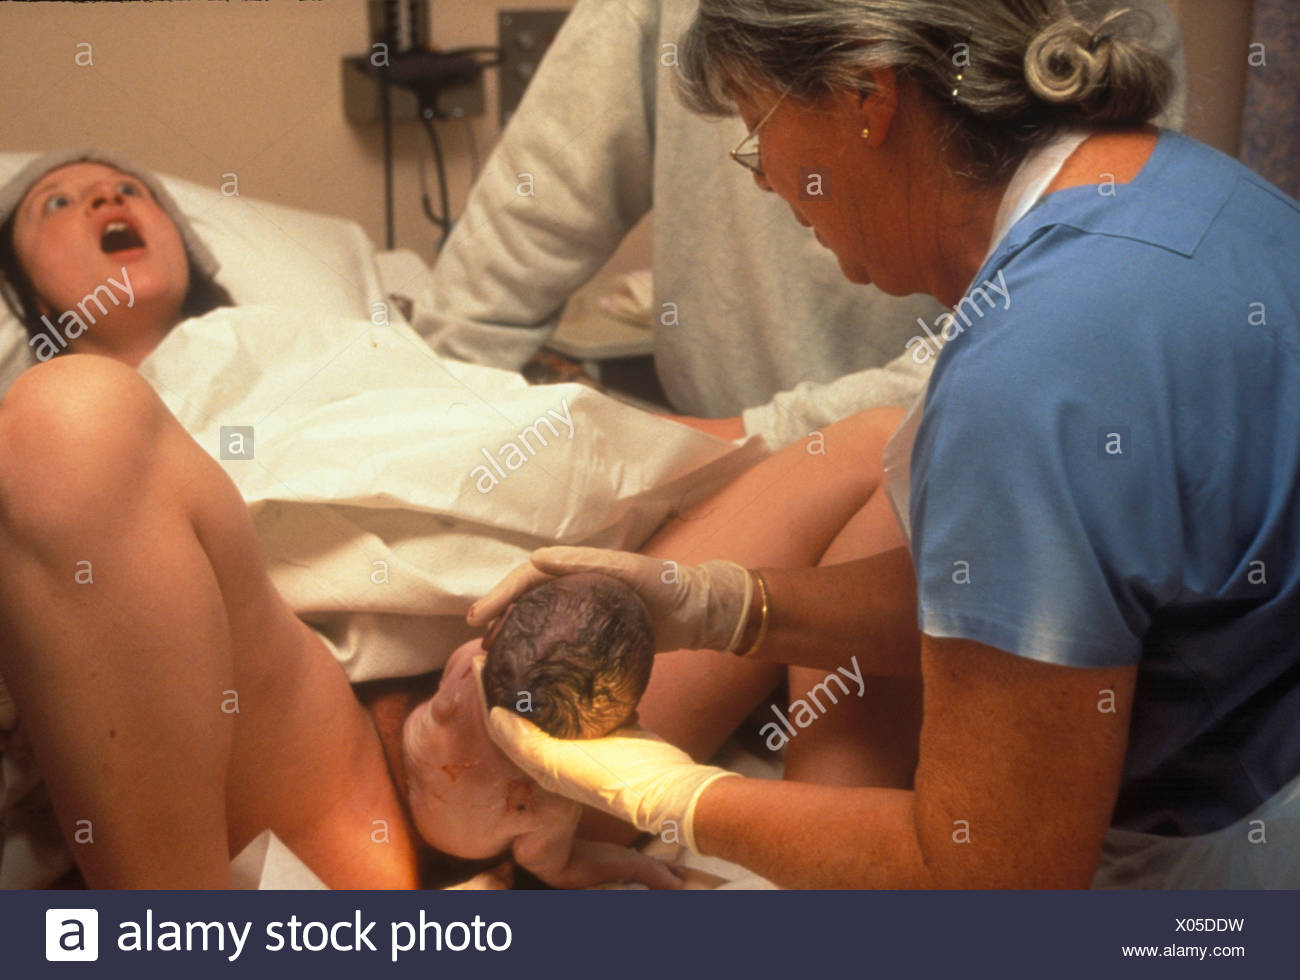 woman giving birth Stock Photo - Alamy